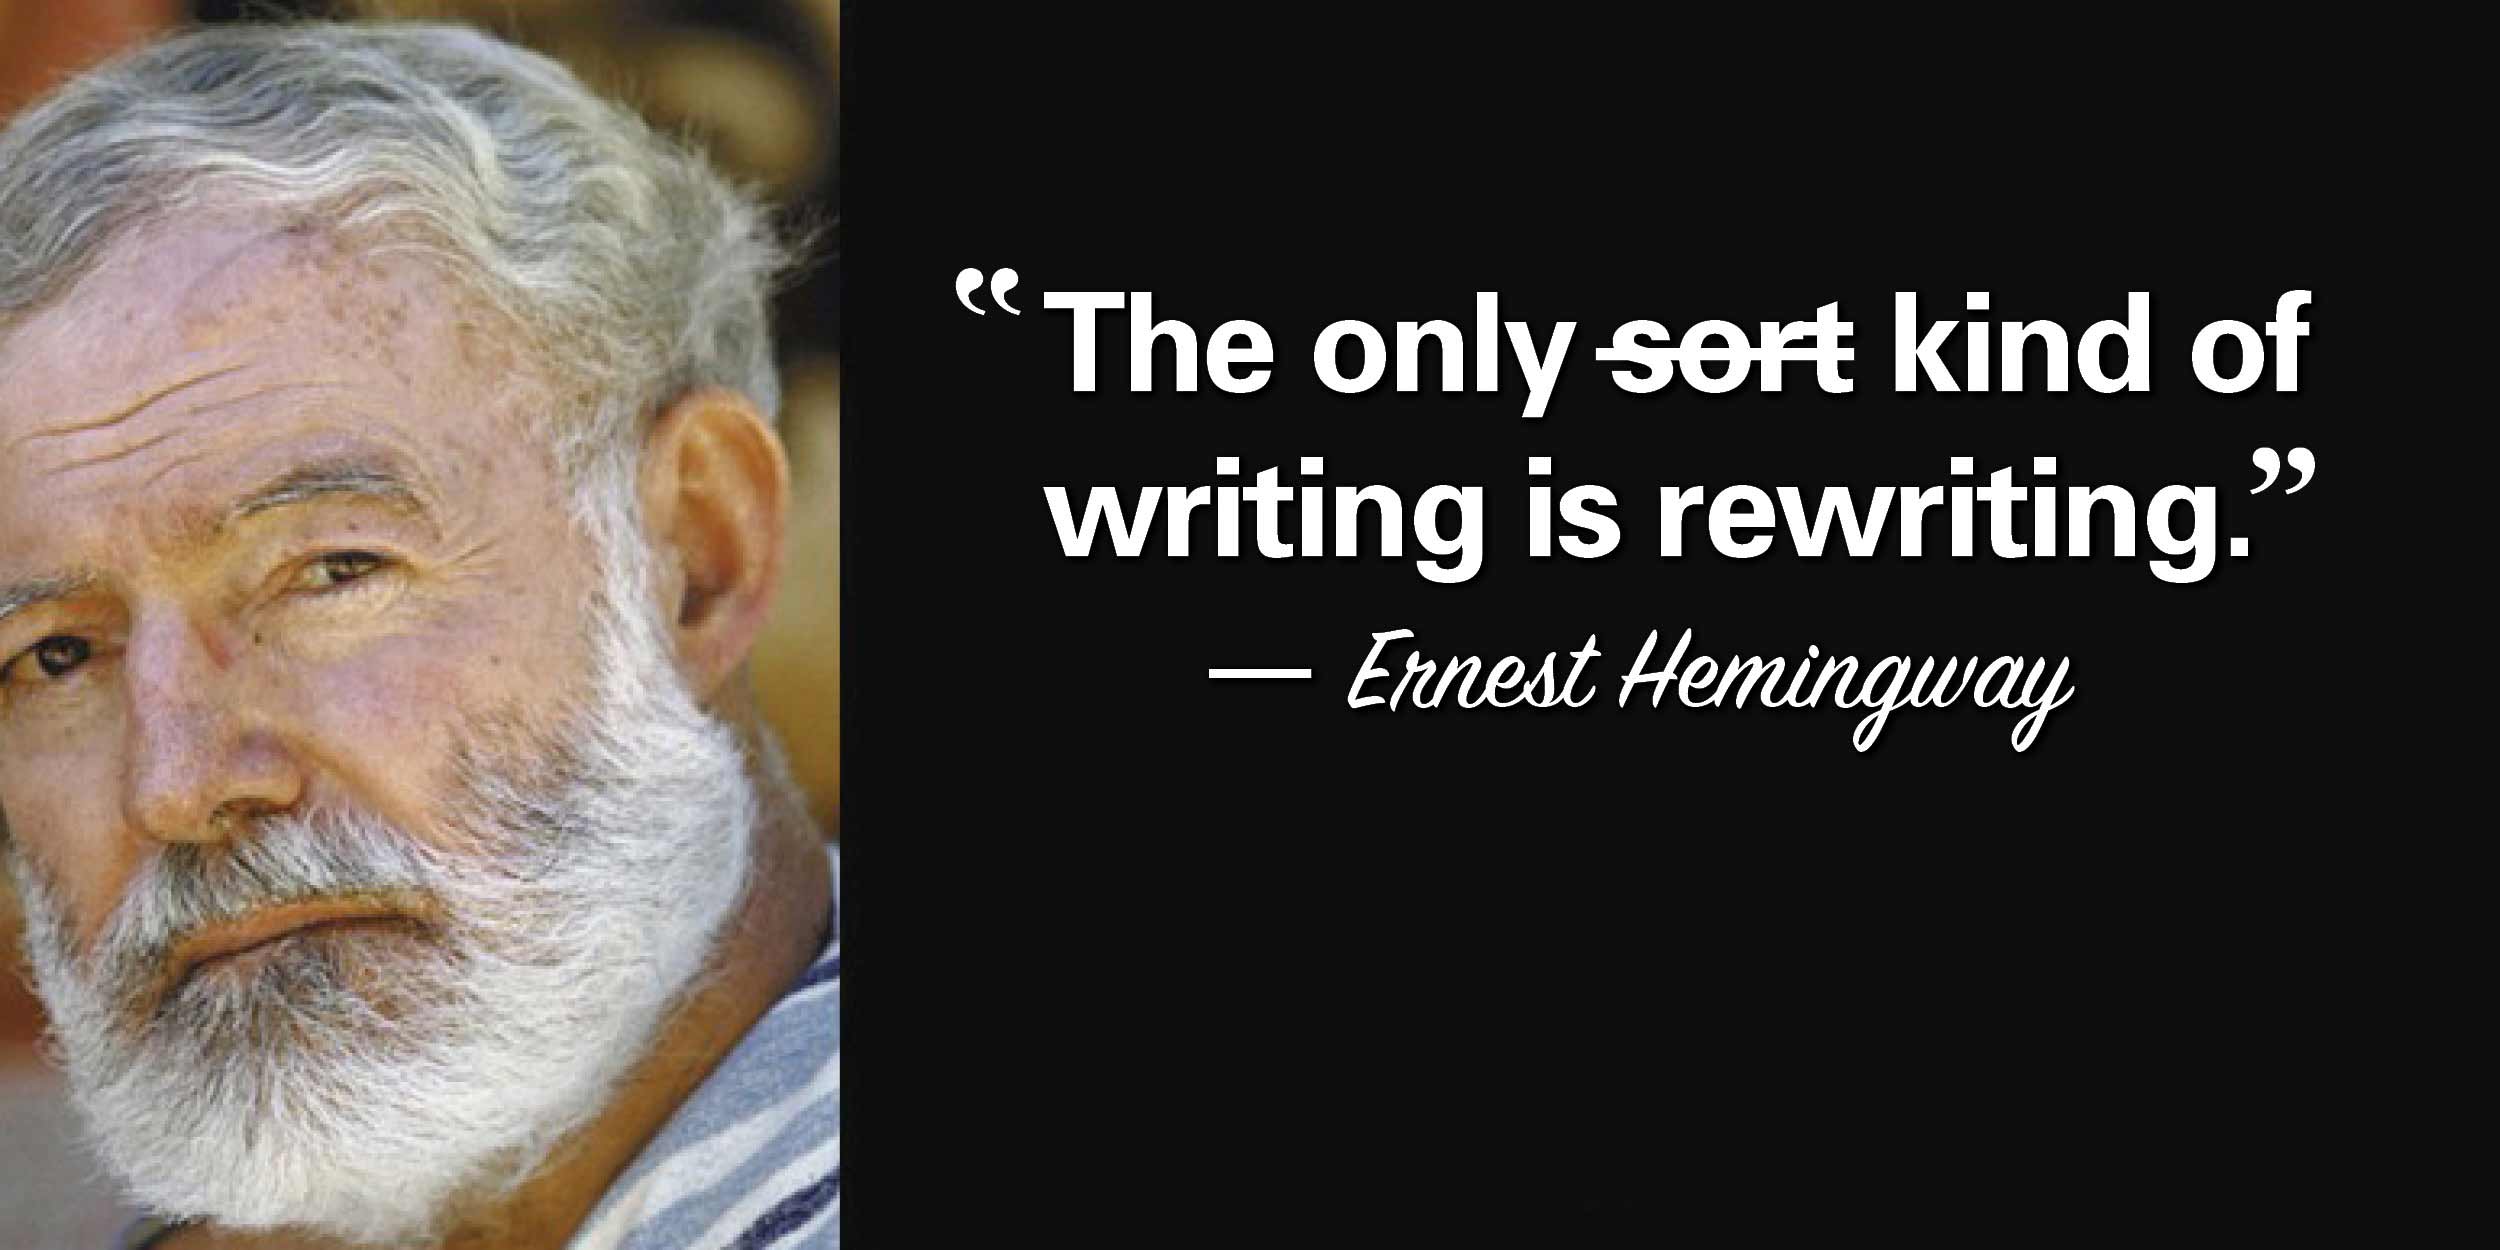 Ernest Hemingway and creative writing